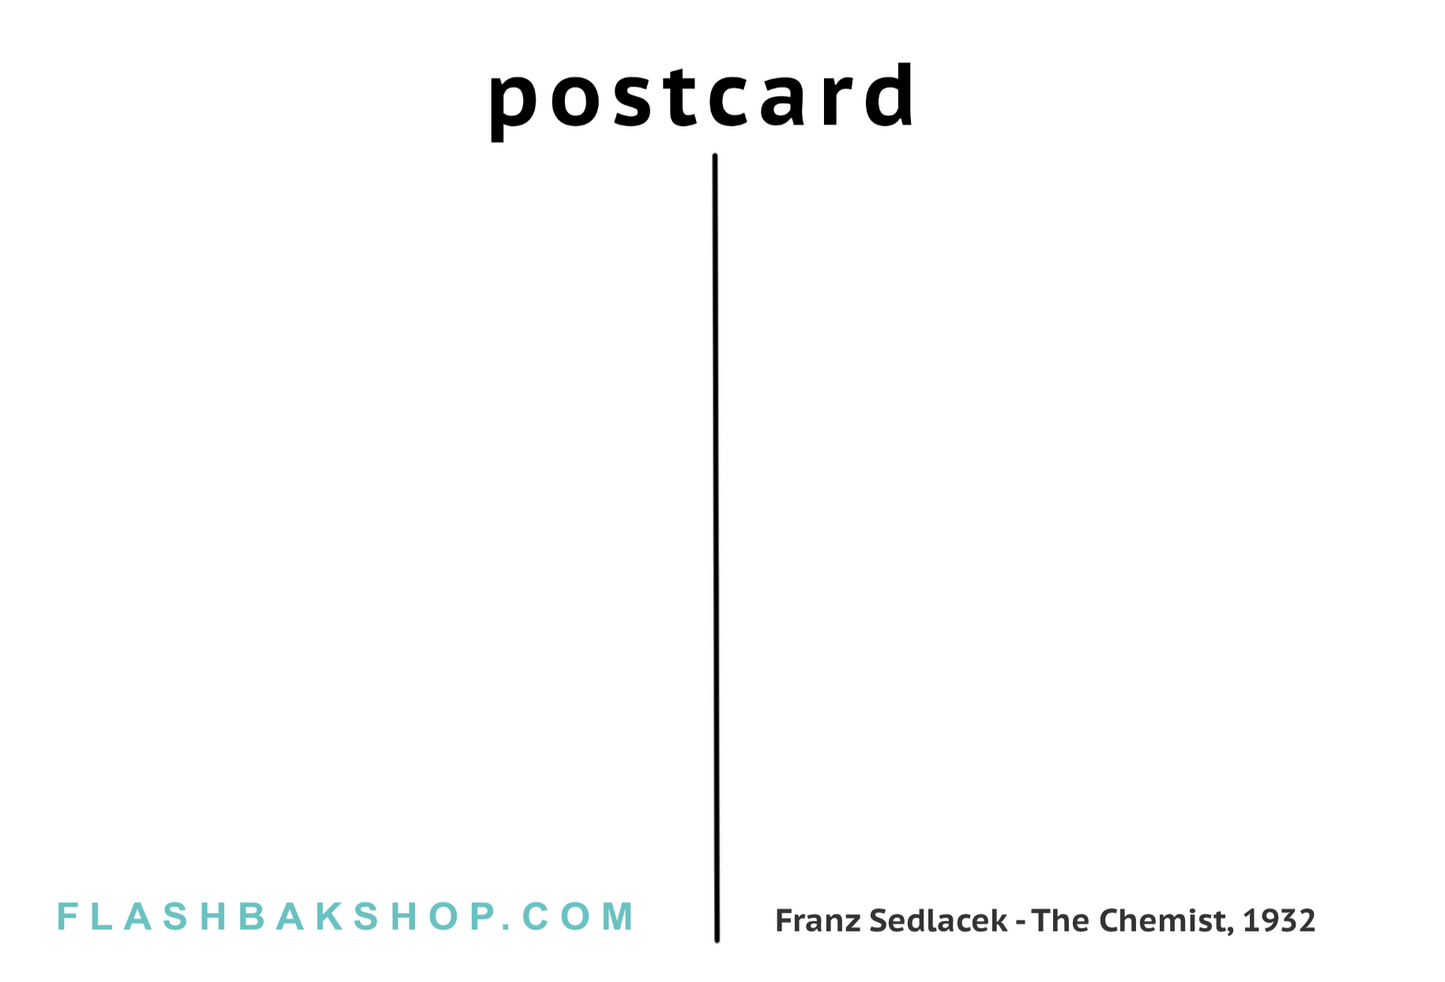 Le Chimiste de Franz Sedlacek, 1932 - Carte postale